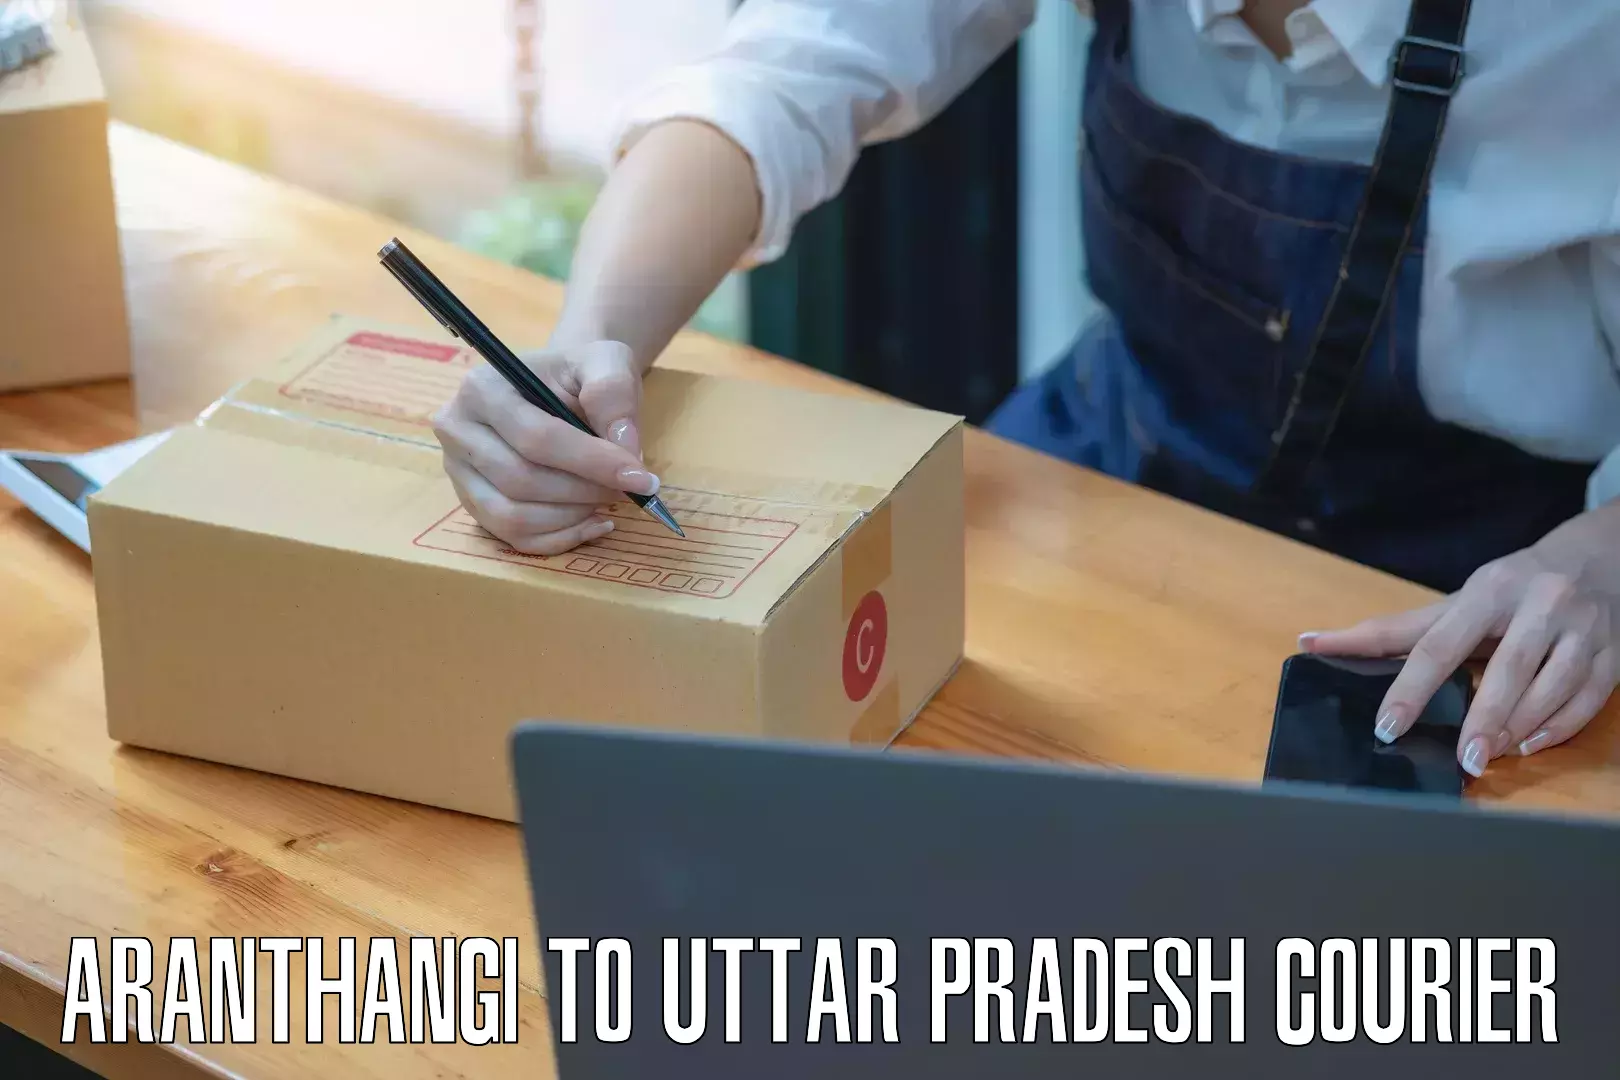 State-of-the-art courier technology Aranthangi to Uttar Pradesh